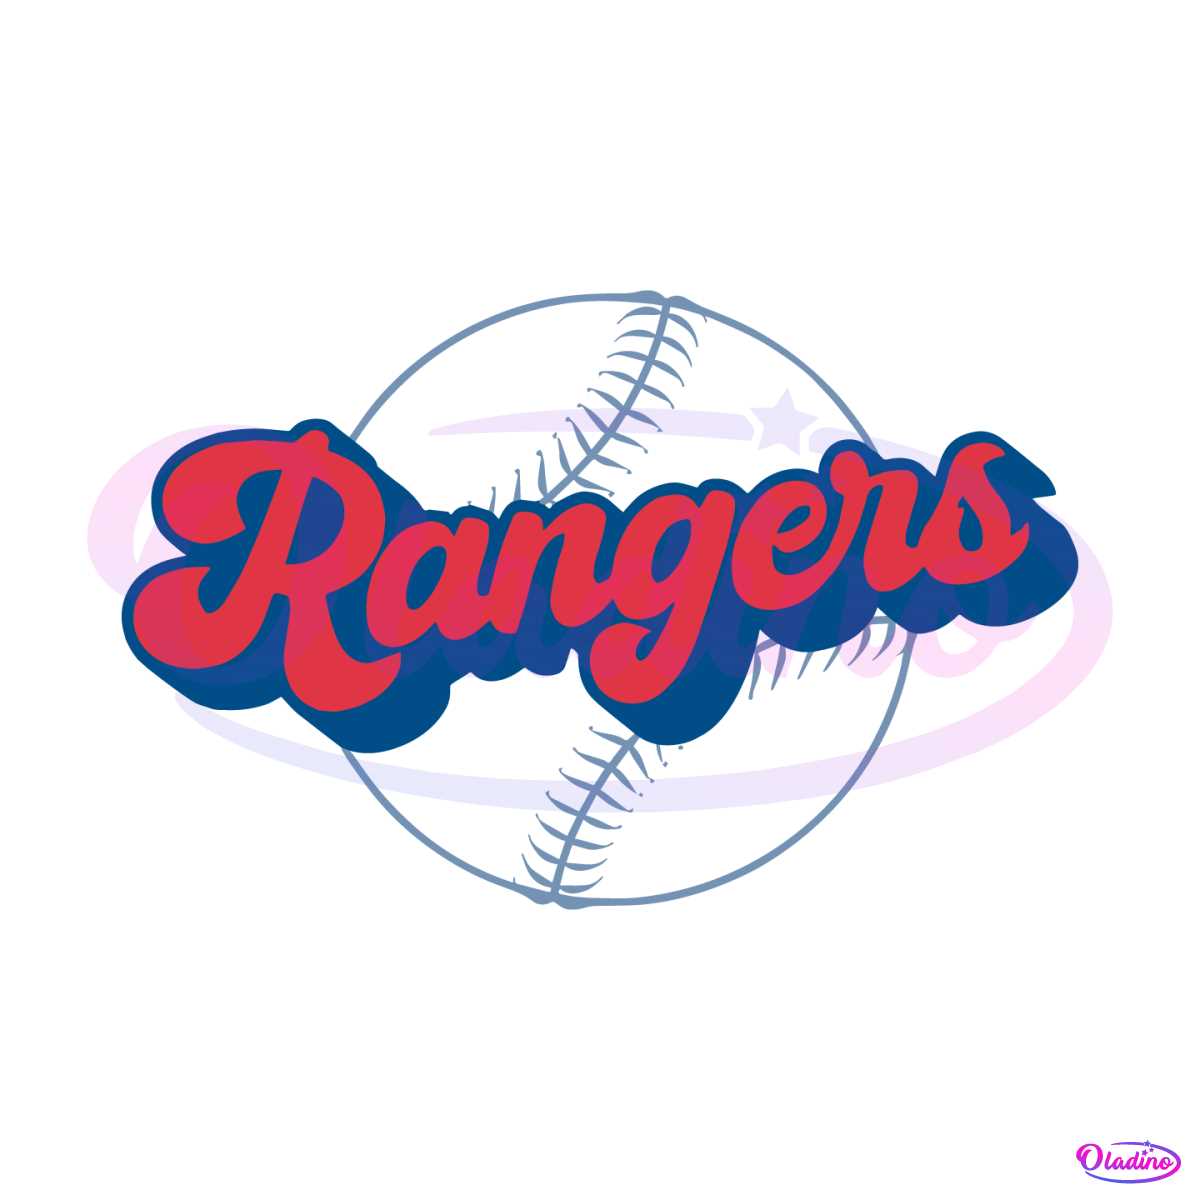 Texas Rangers logo Digital File (SVG cutting file + pdf+png+dxf)